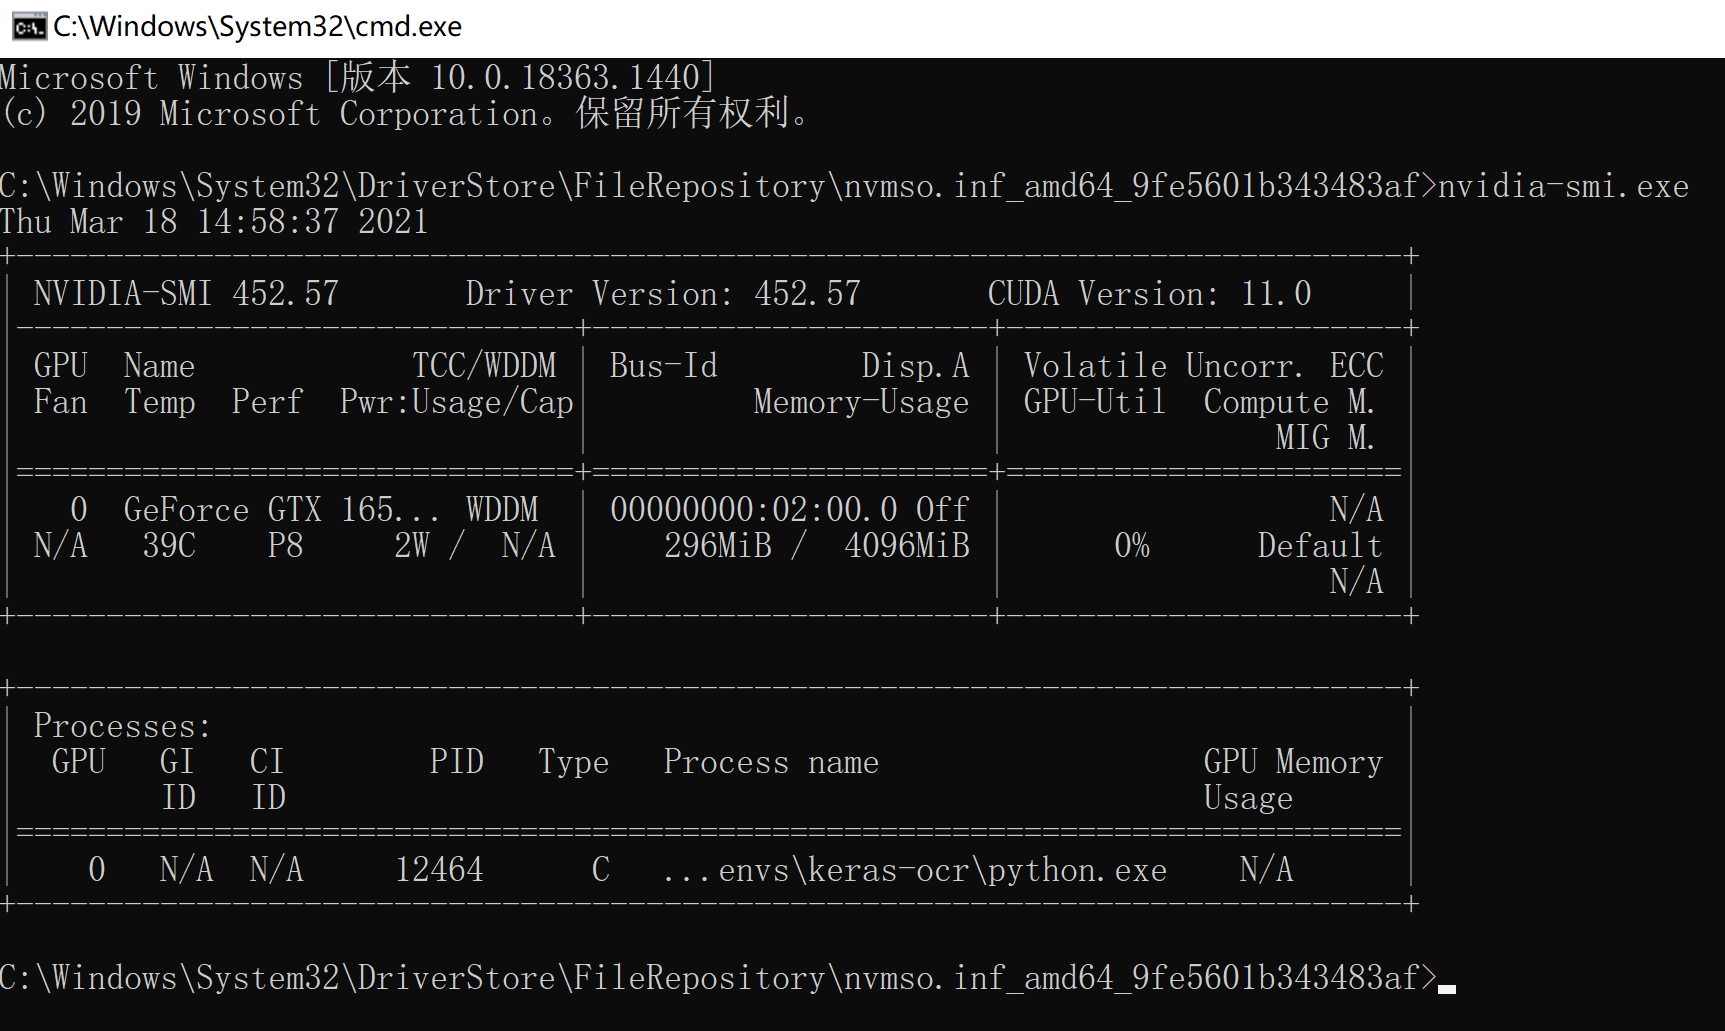 NVIDIA-SMI 525.85.12. Torch Version CUDA. NVIDIA-SMI CUDNN Version. Torch not compiled with CUDA enabled. Torch cuda test